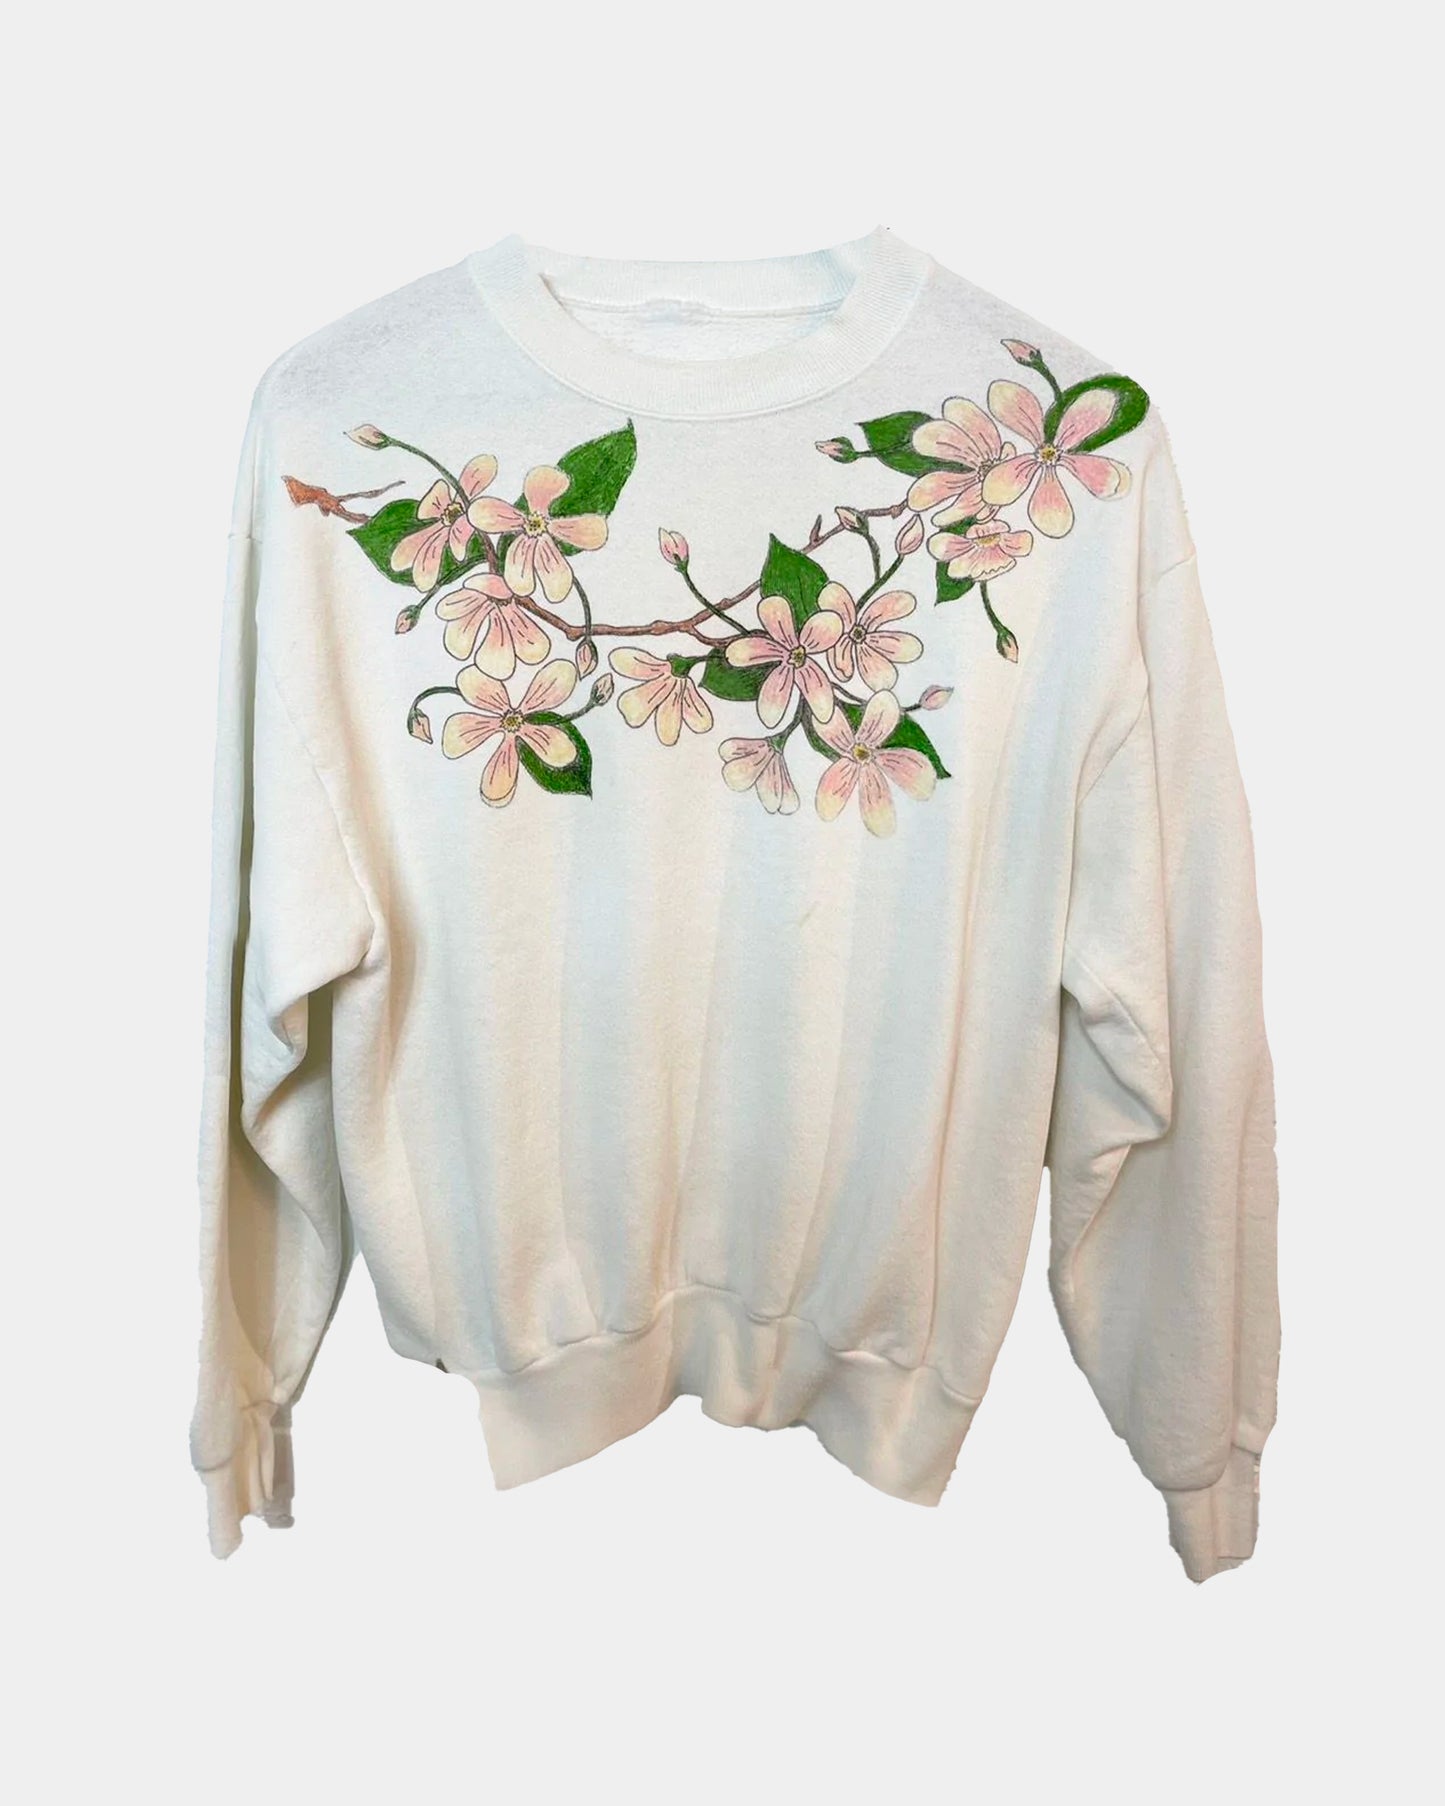 Vintage 90s Floral Super Soft White Sweater Crewneck